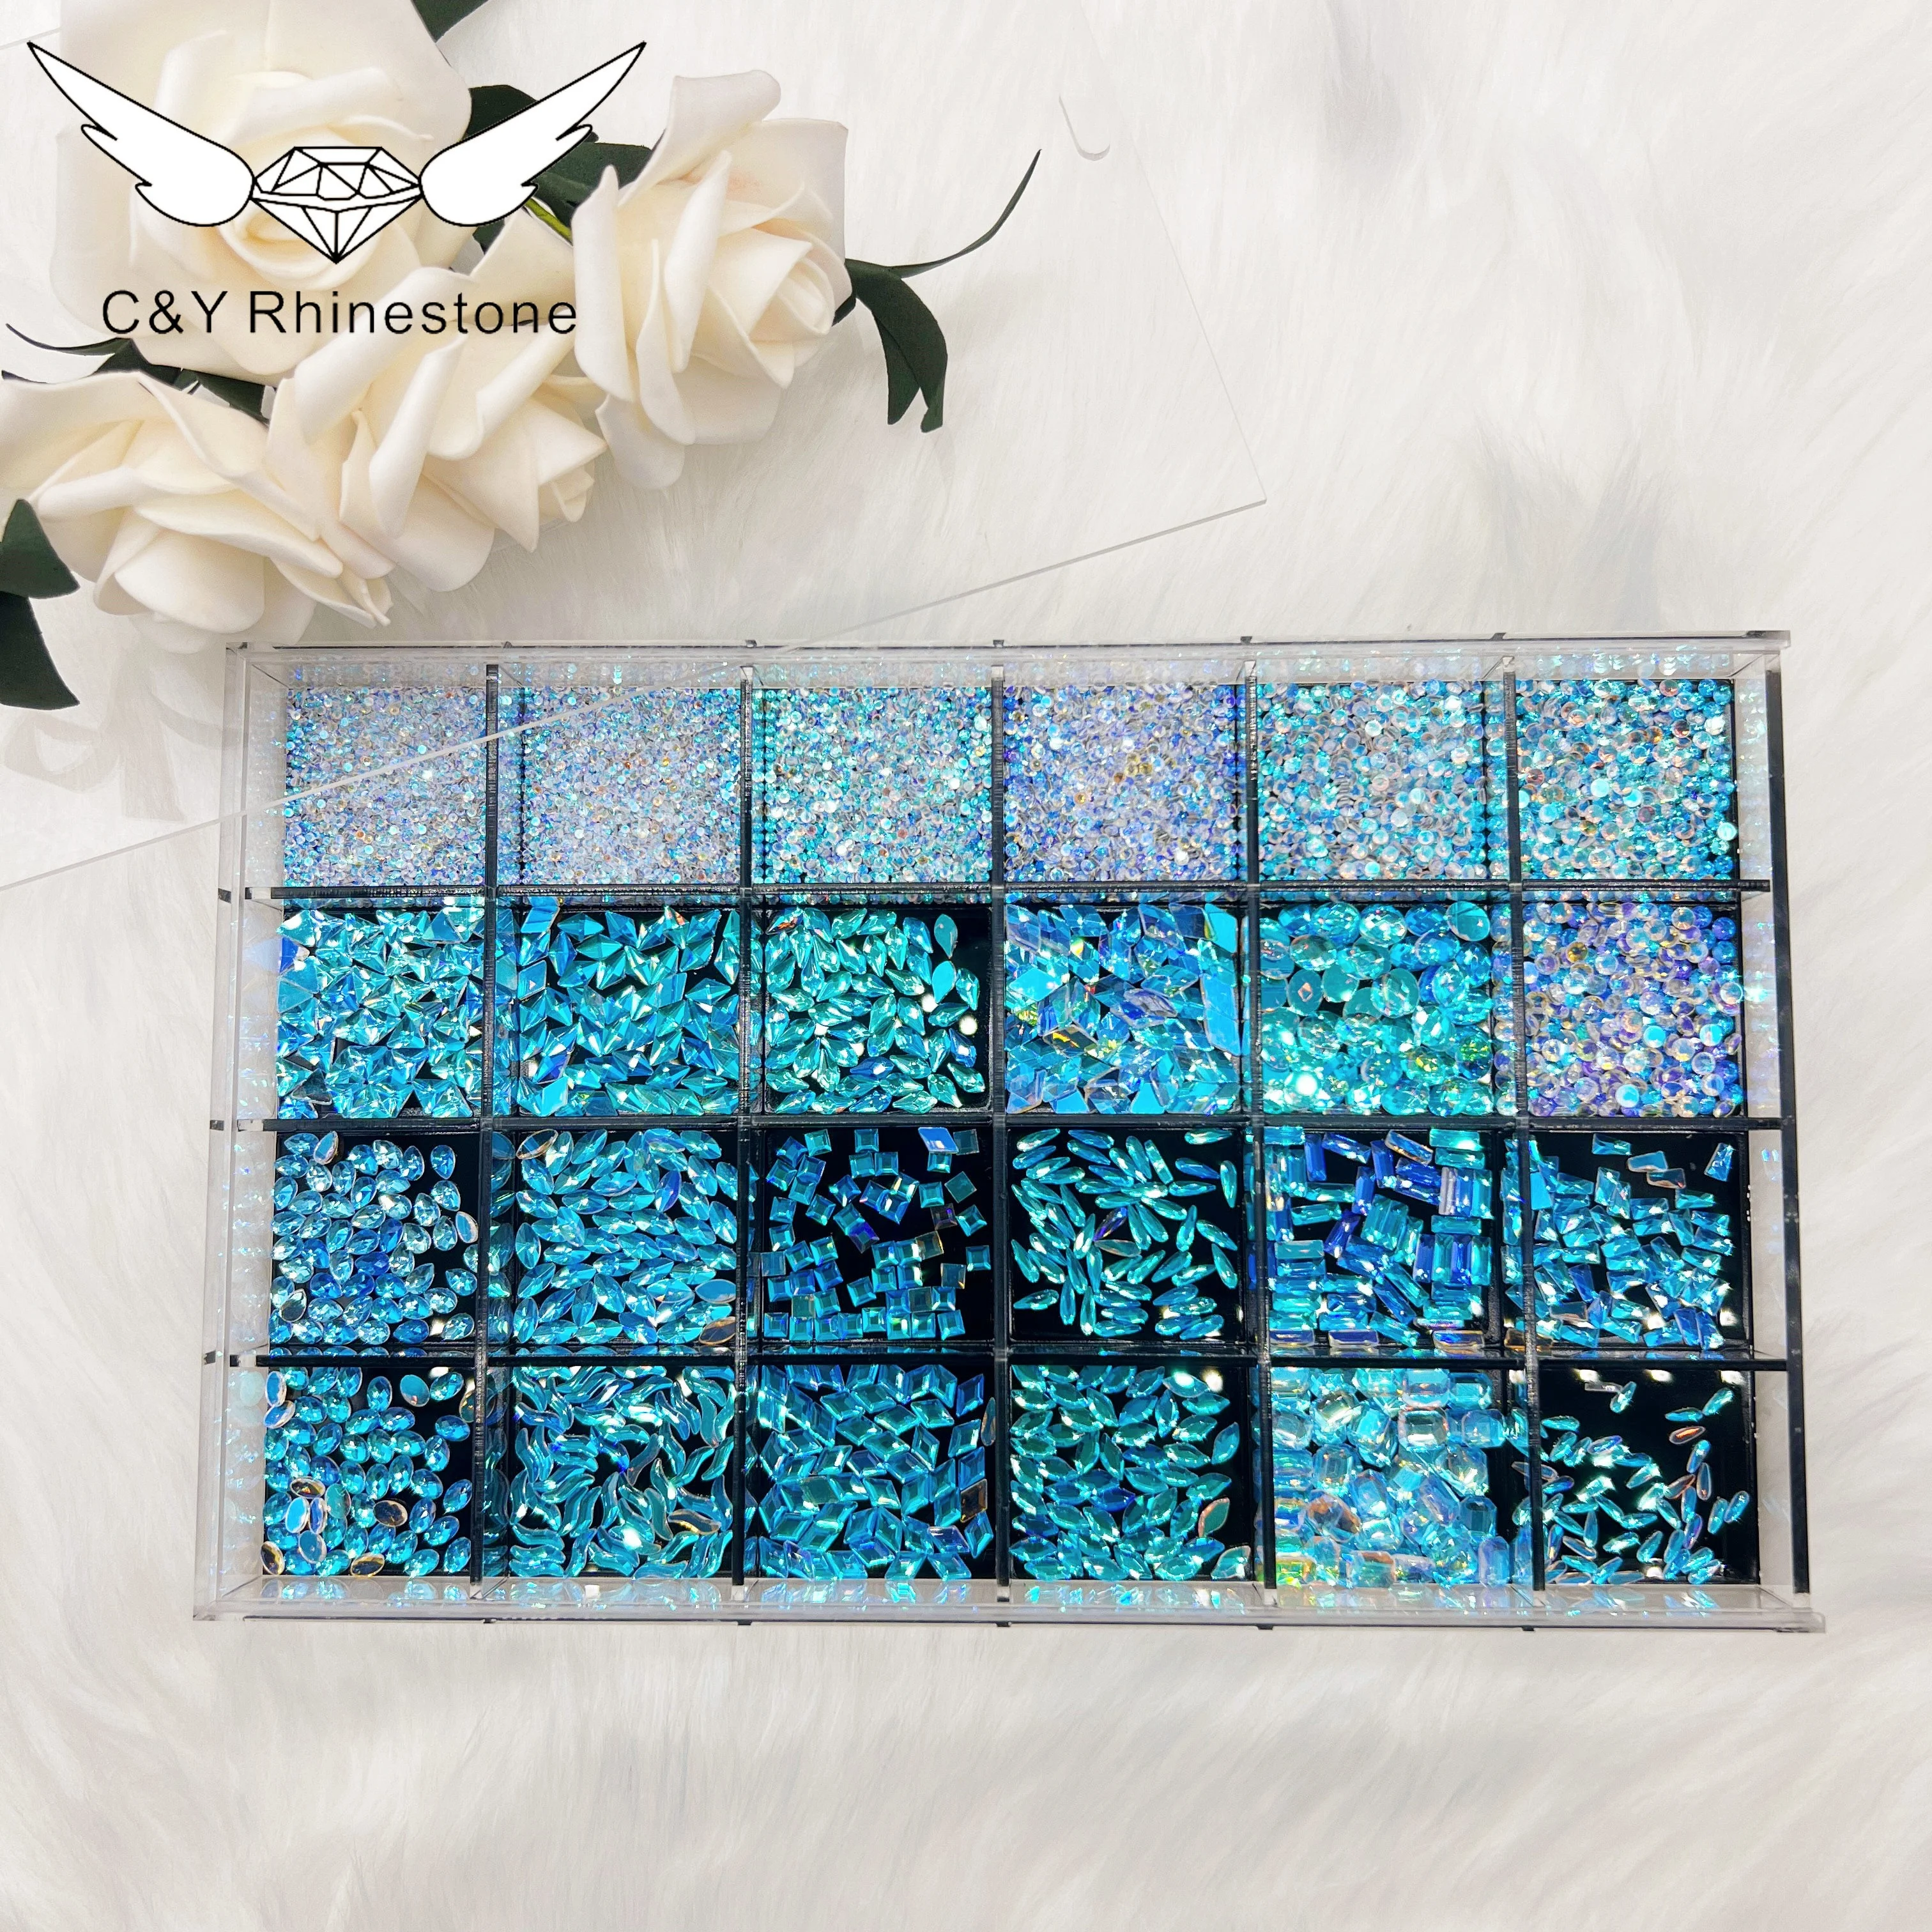 

CY 6550pcs Aurora Blue Luxury Rhinestone For Nail Art Stone Decoration Crystal Size Set